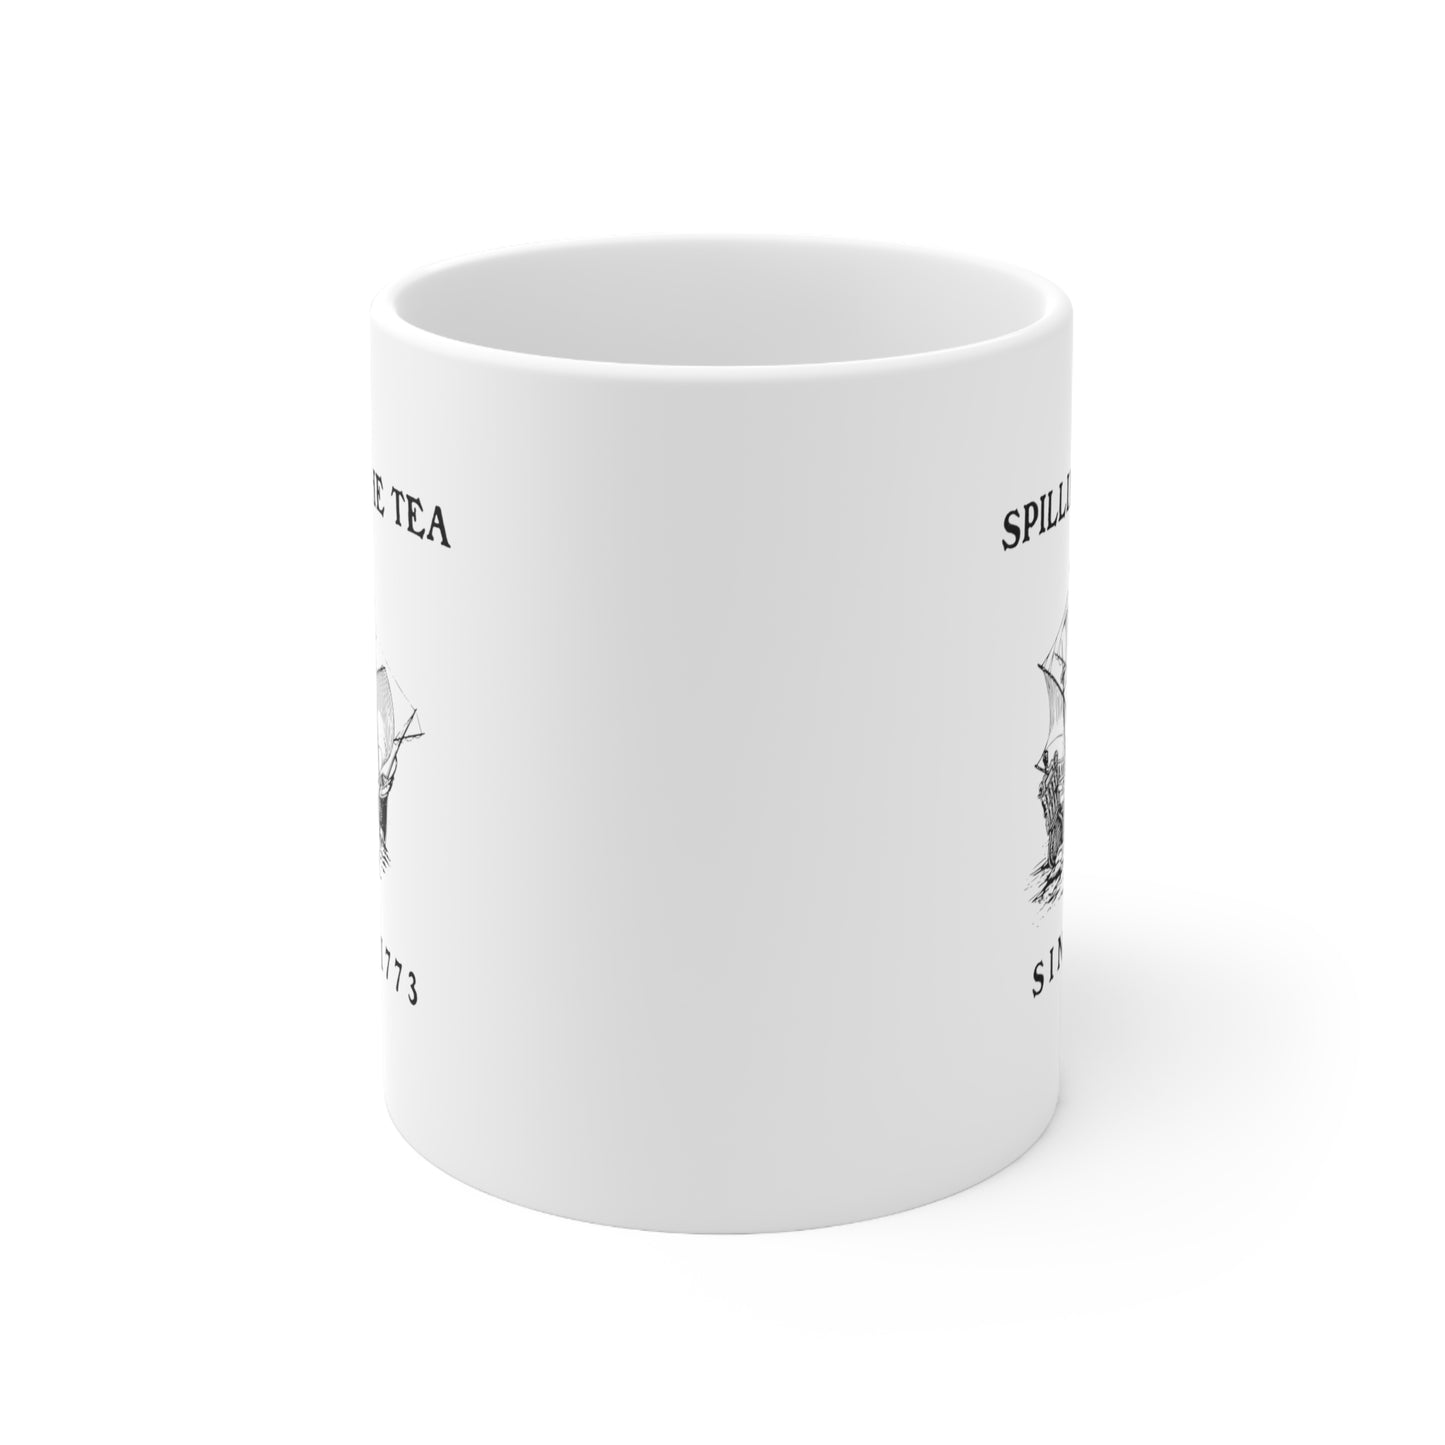 Boston Tea Party joke themed ceramic coffee cup